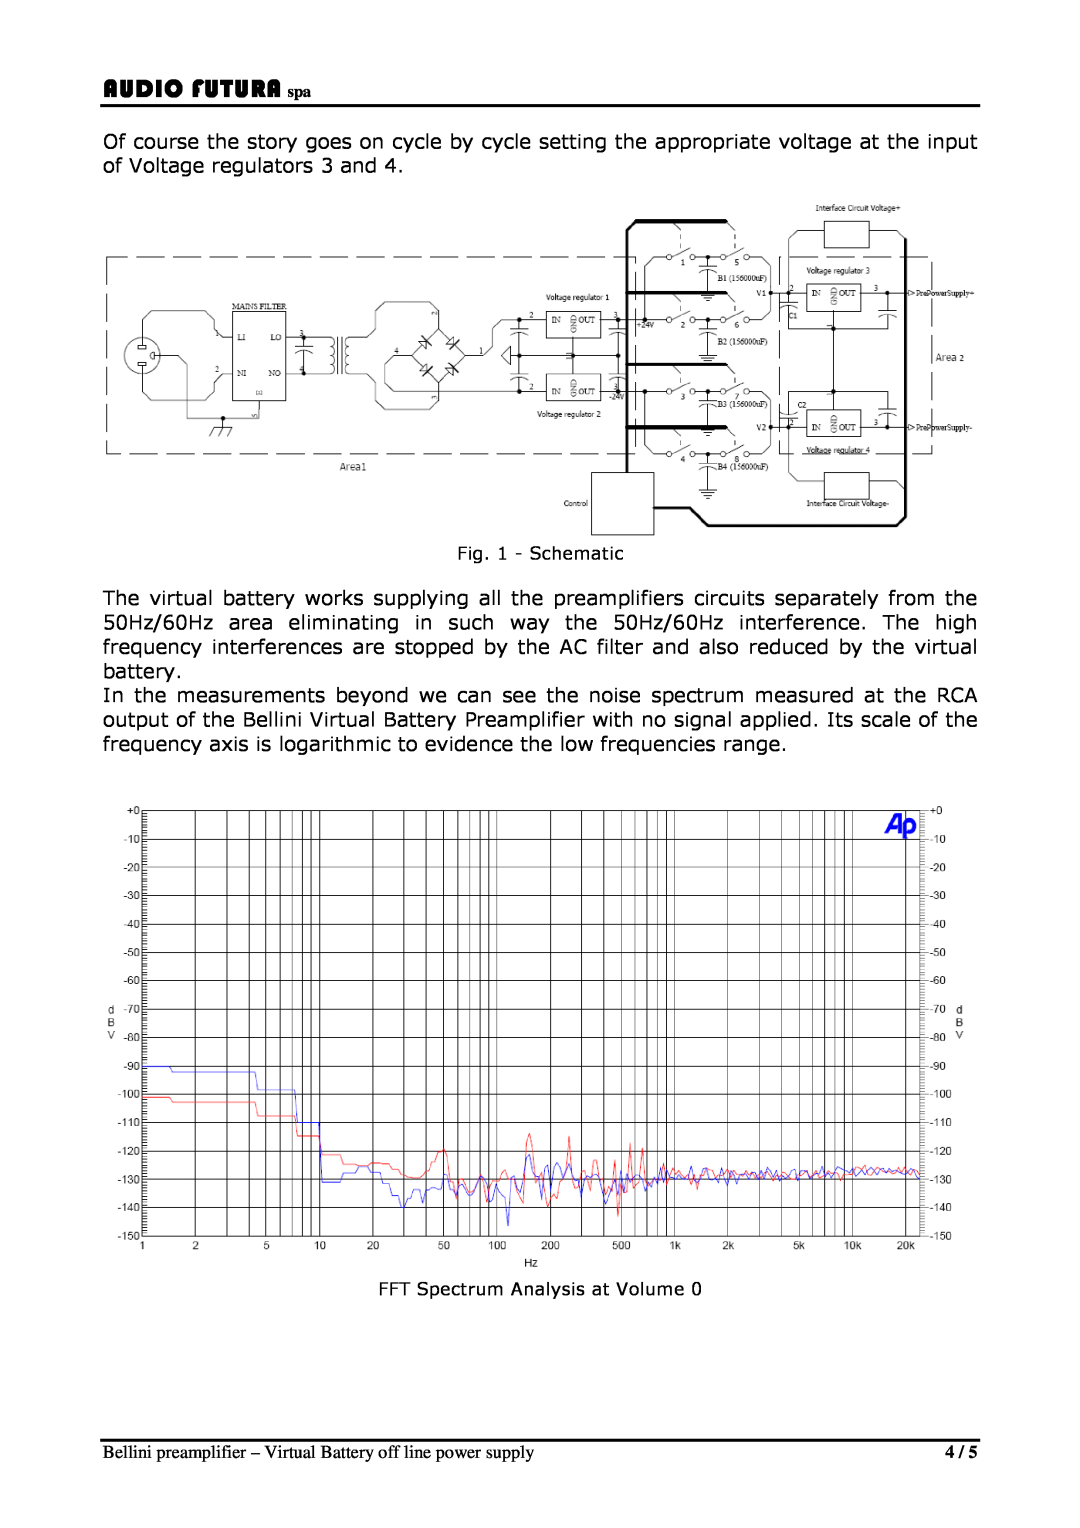 Audio Analogue SRL BELLINI manual AUDIO FUTURA spa, Schematic, FFT Spectrum Analysis at Volume 